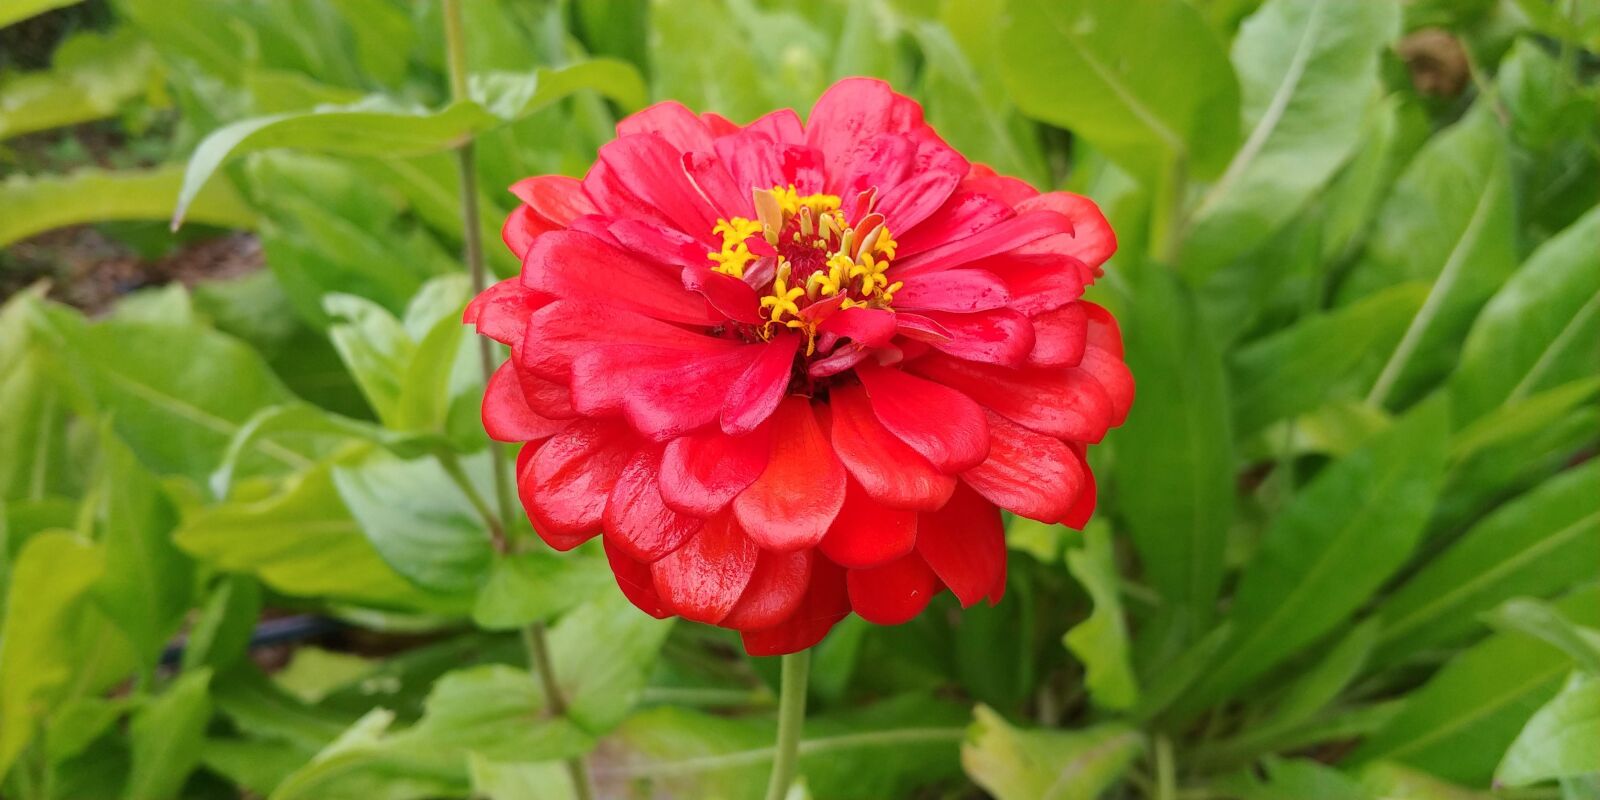 LG V30 sample photo. Flower, red, nature photography